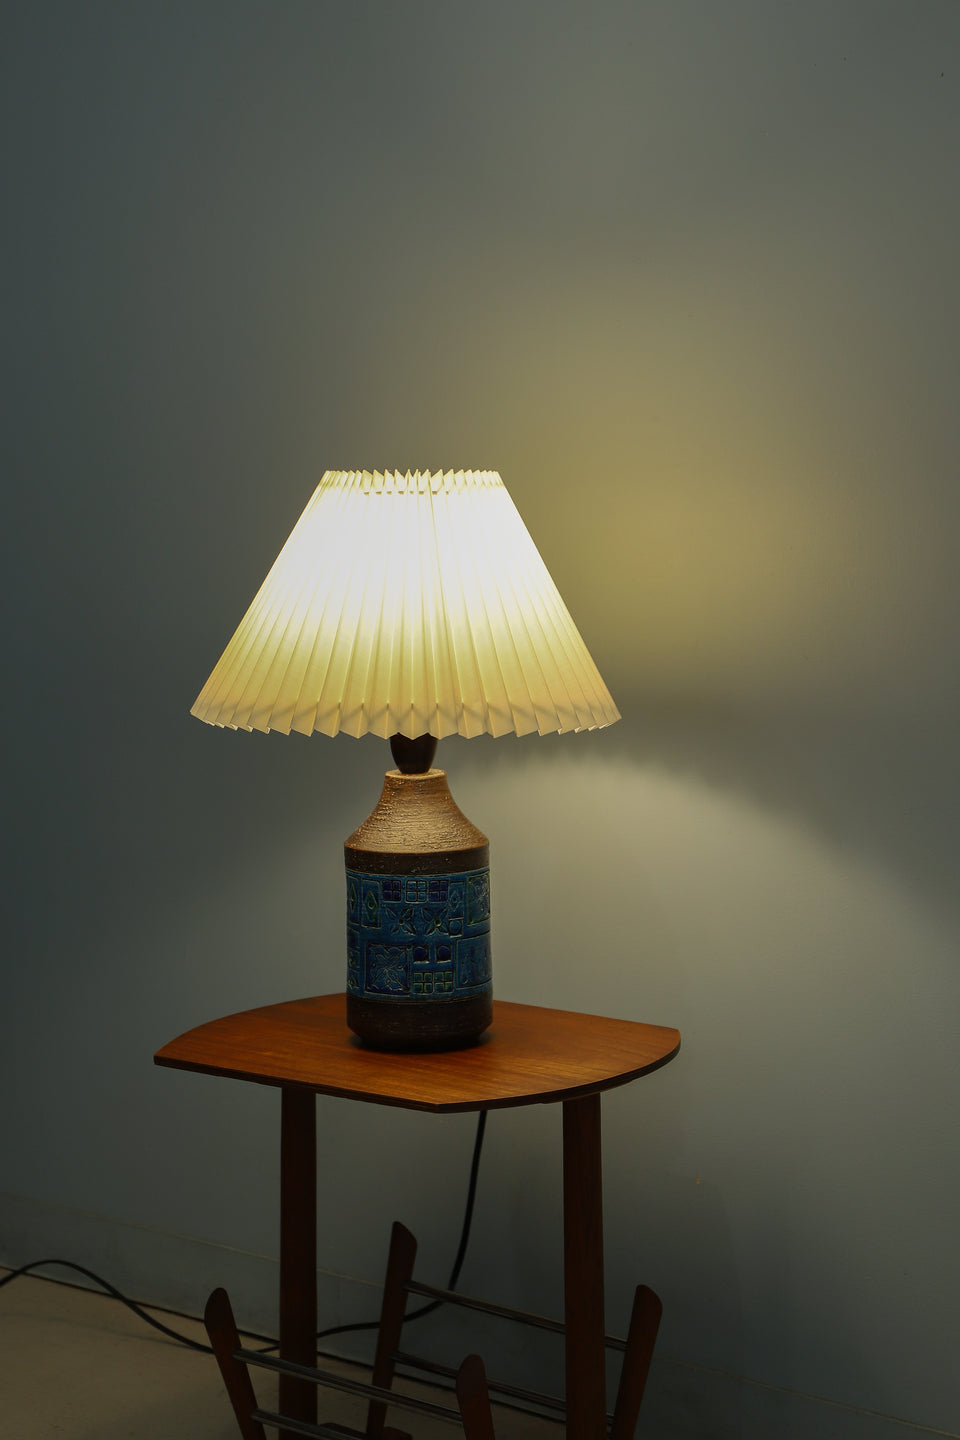 BITOSSI “Rimini Blu” Table Lamp Aldo Londi/イタリアビンテージ ビトッシ リミニブルー テーブルランプ